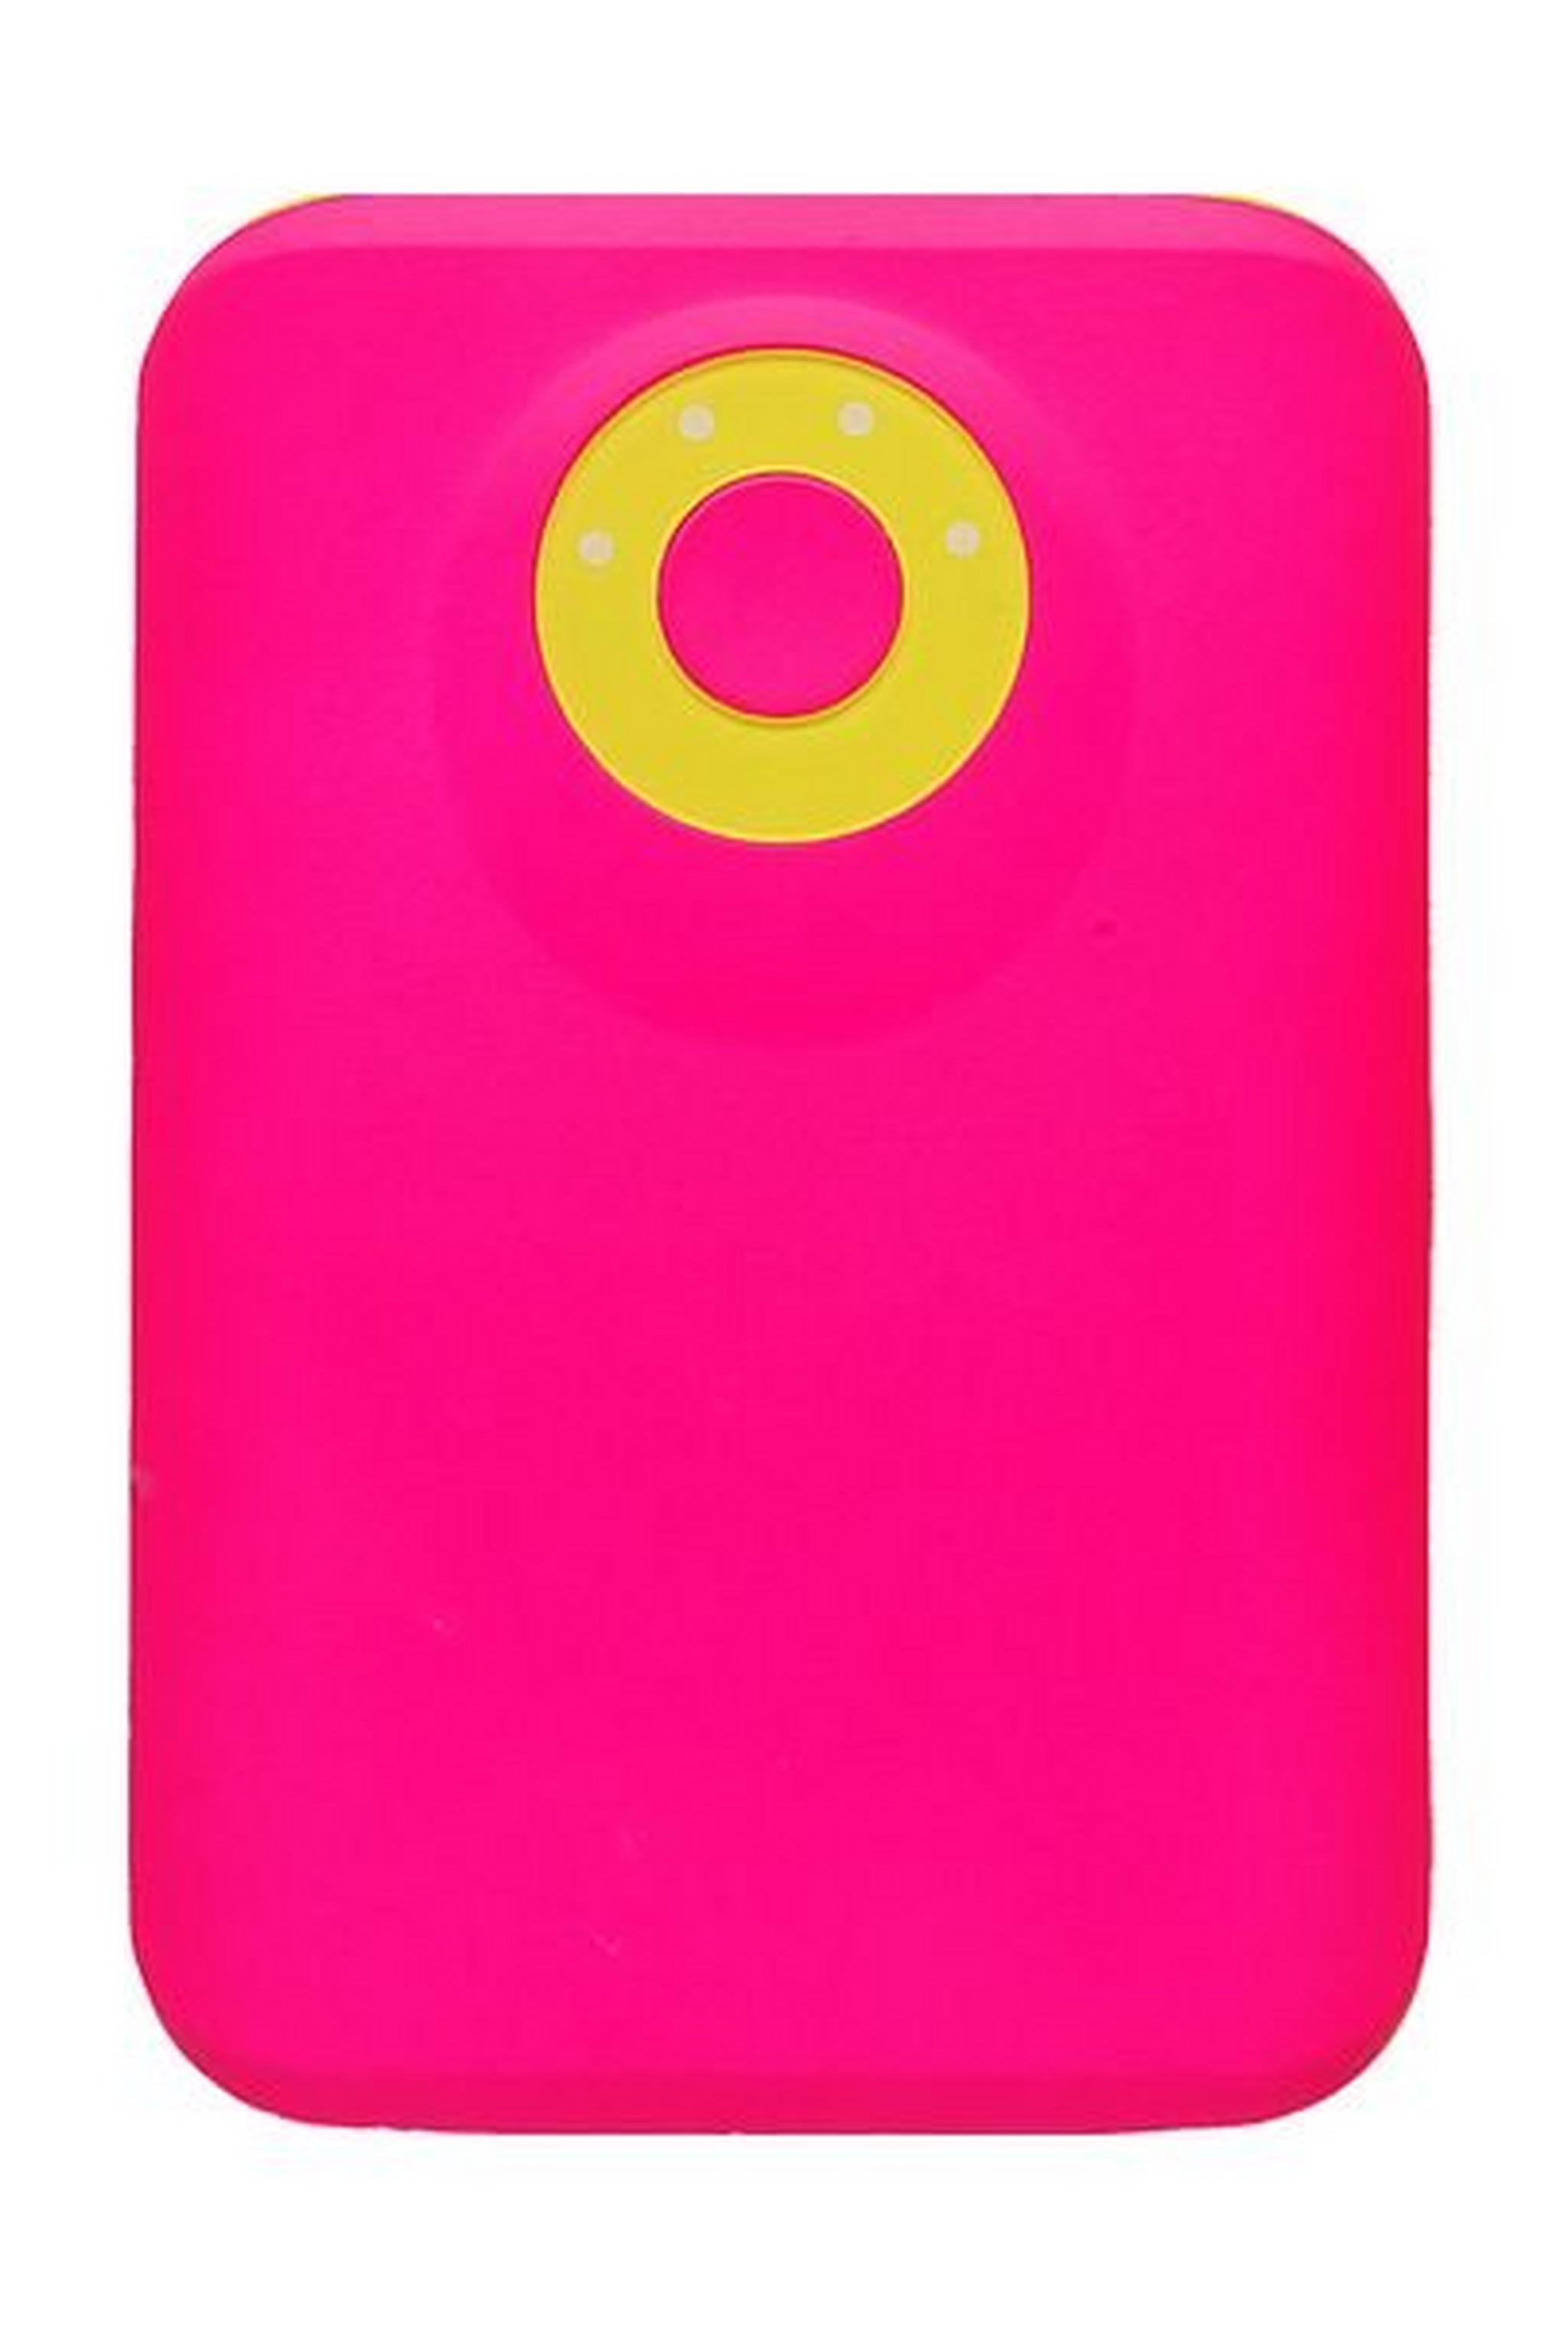 iCon PPB52 5200mAh Portable Power Bank - Pink